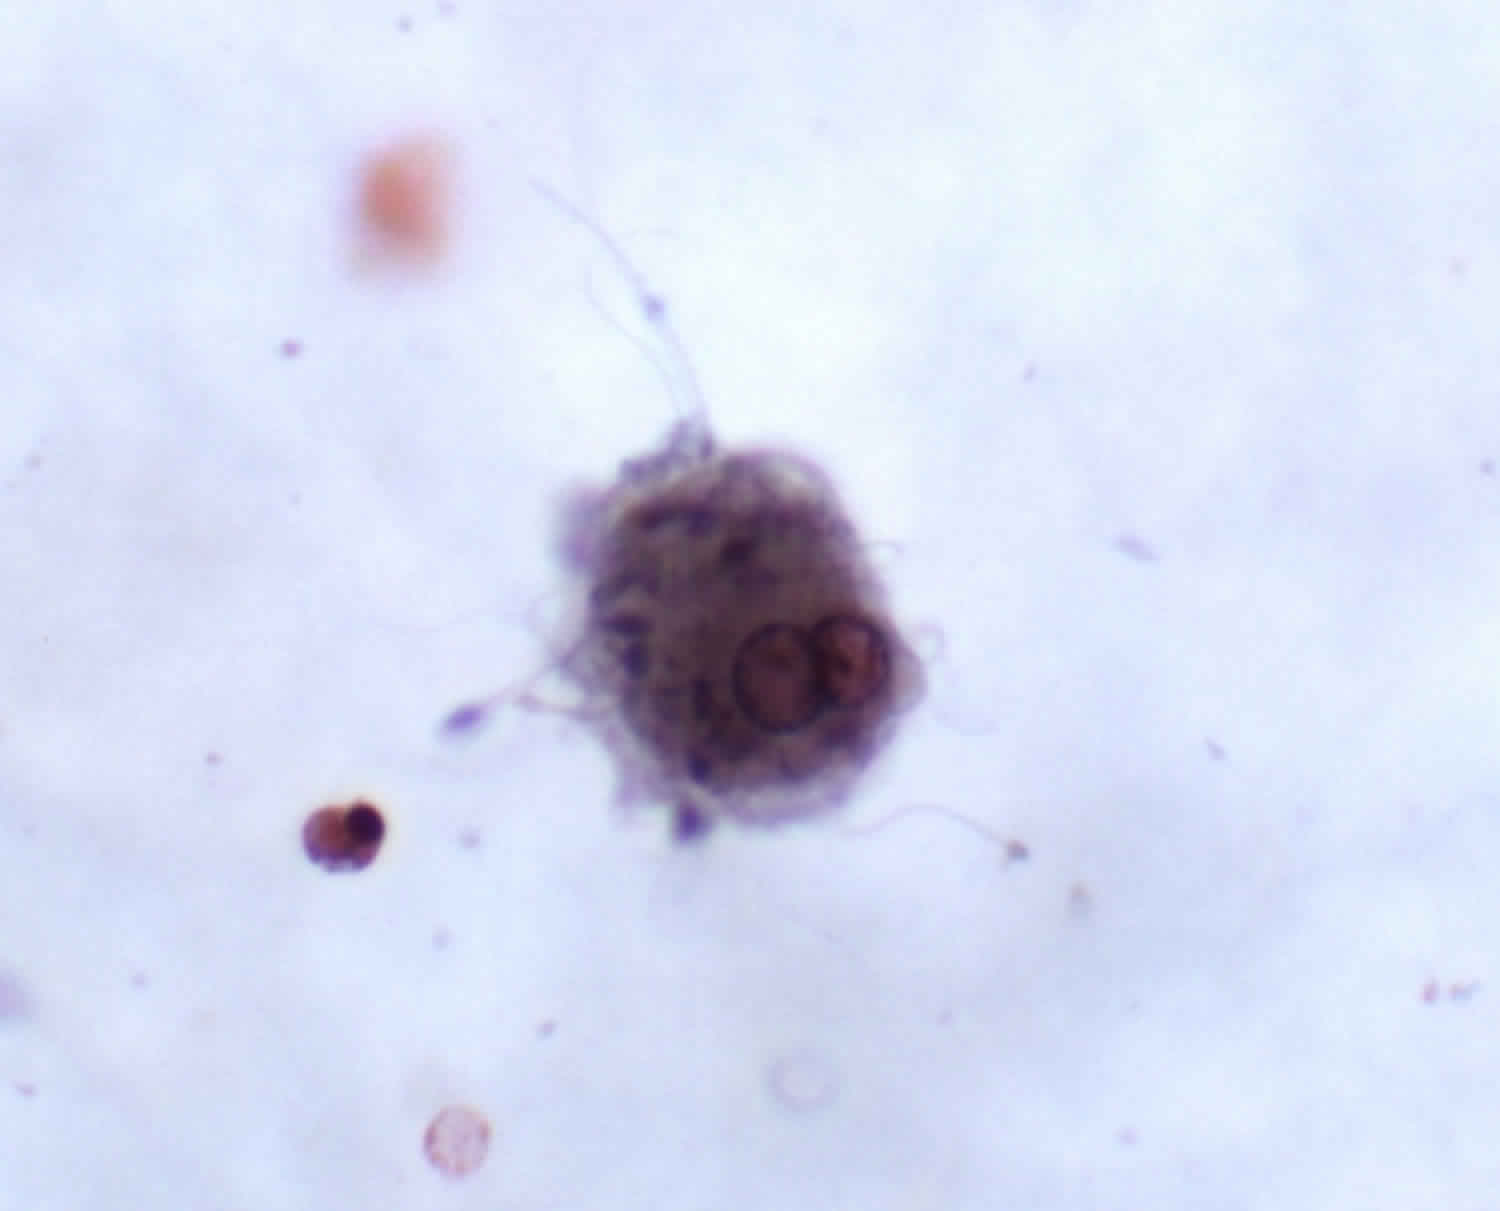 Seminal vesicle cells in urine